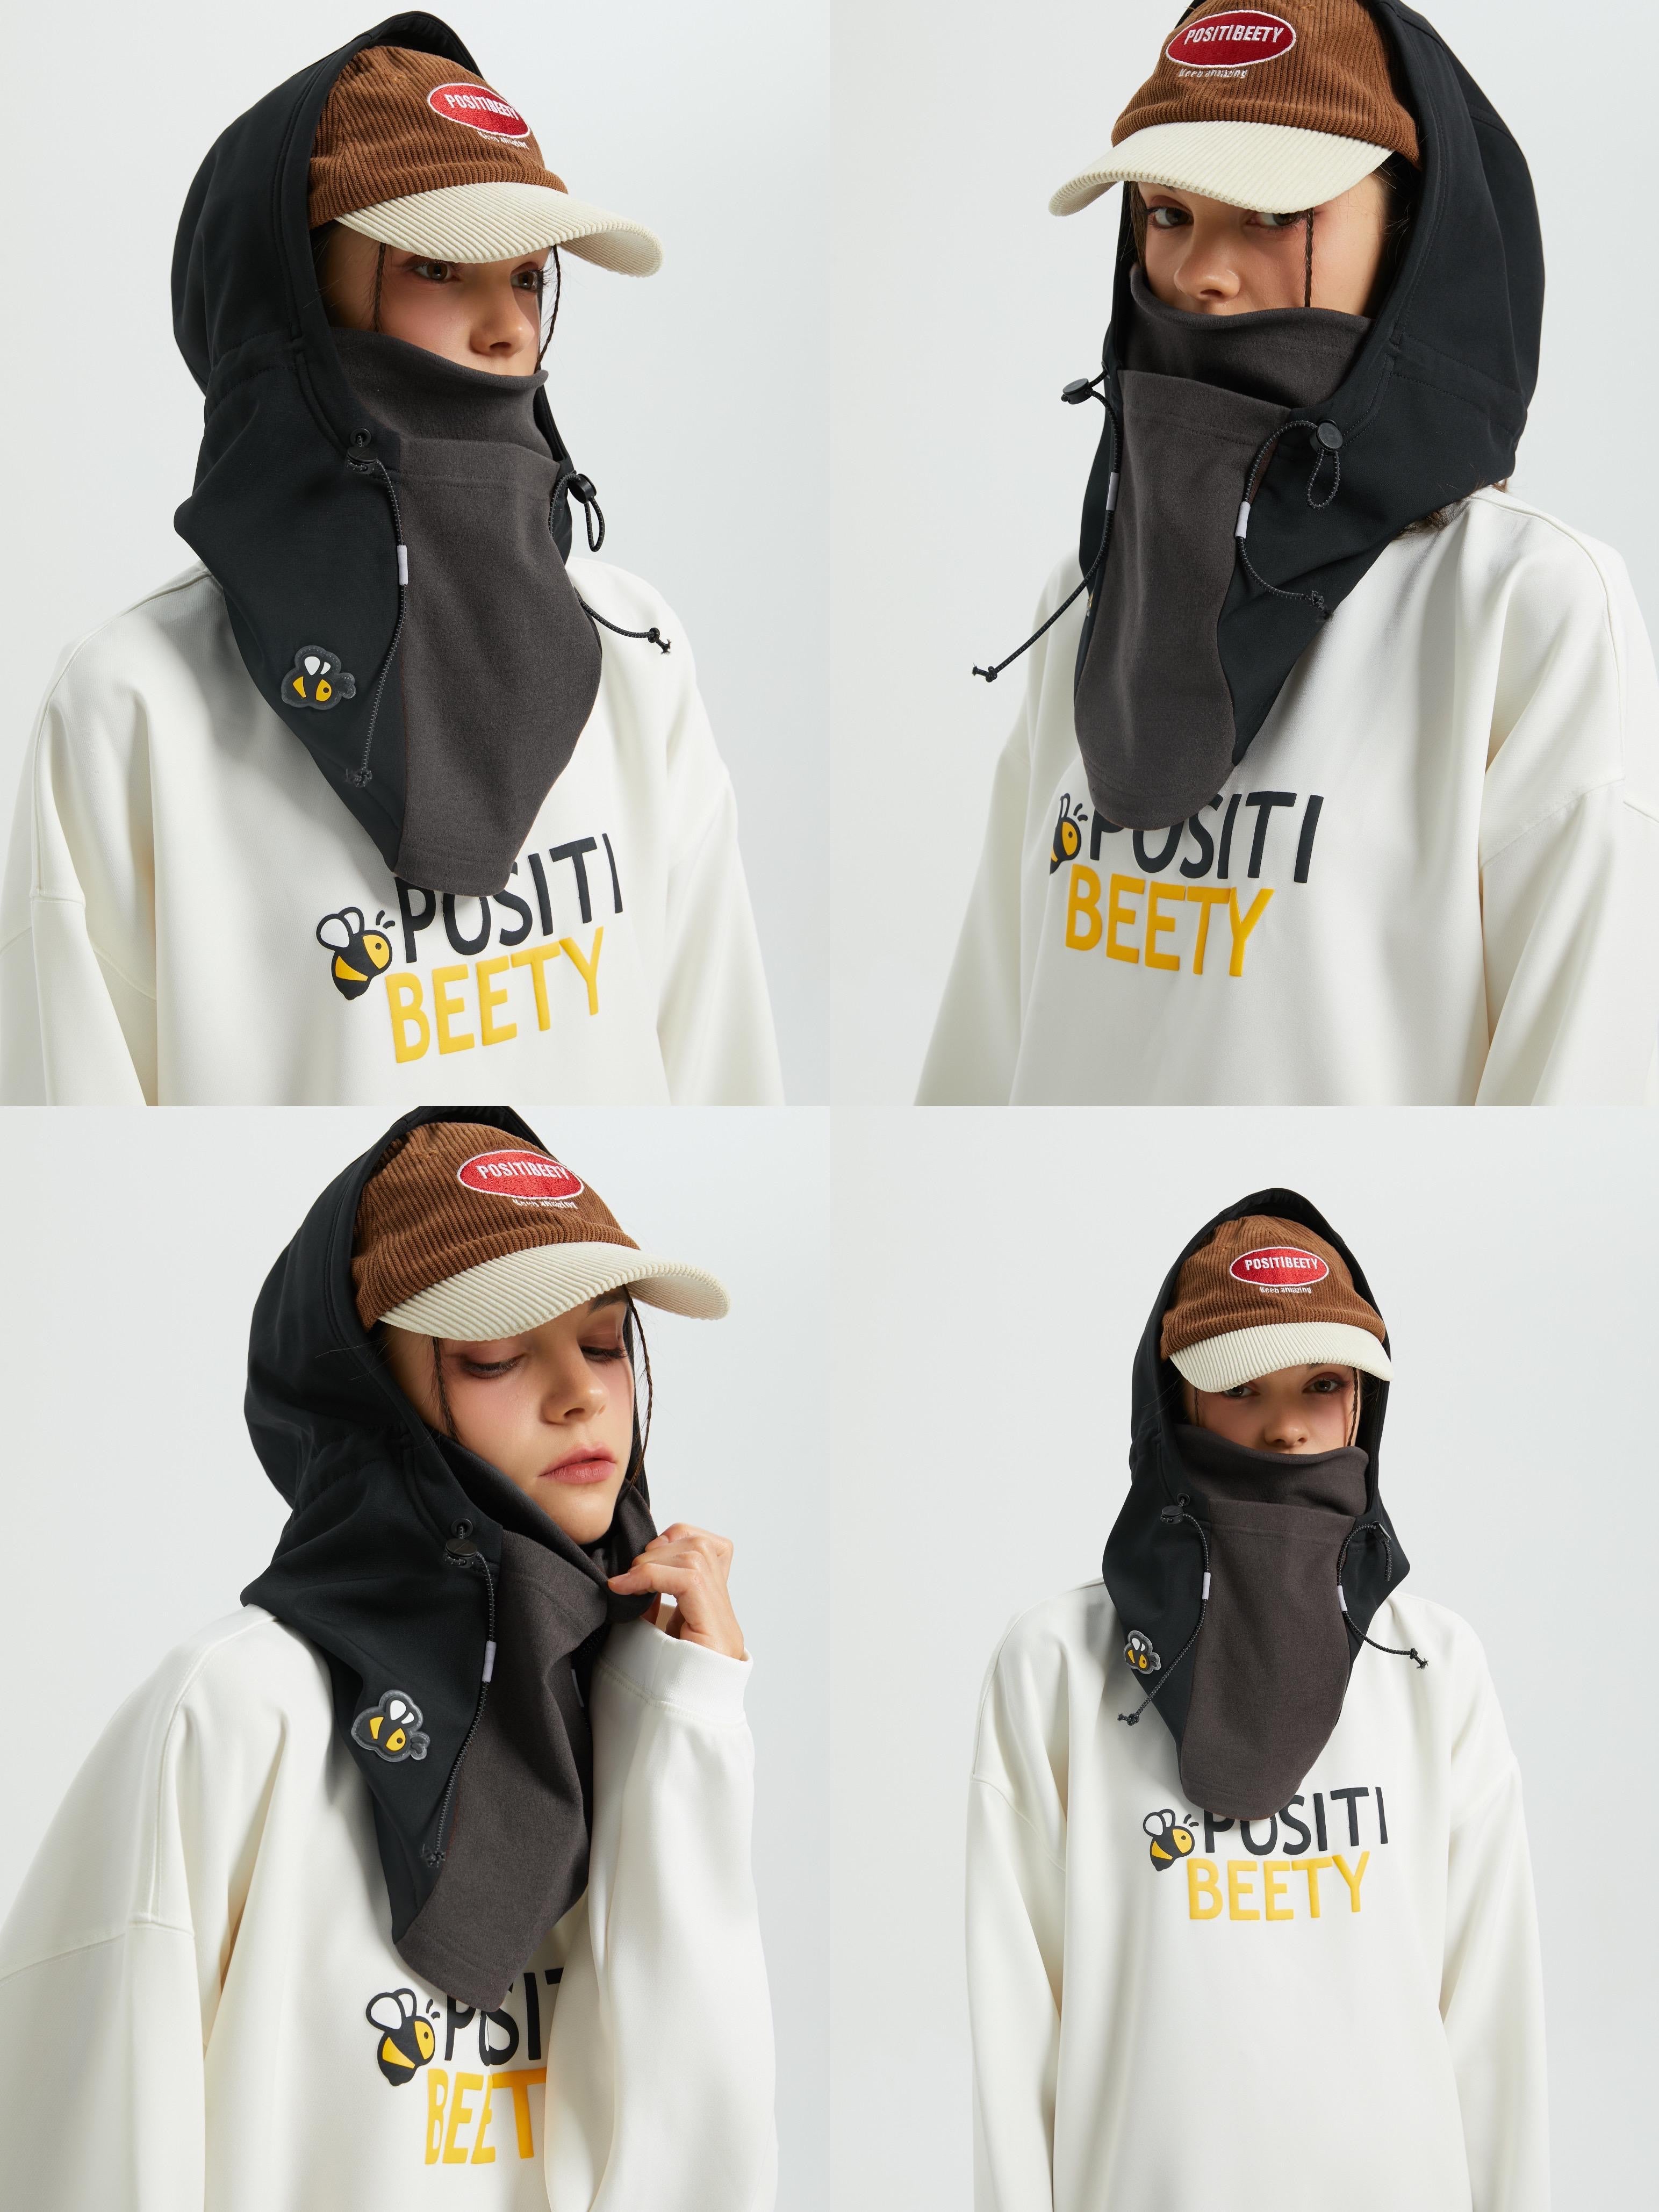 Positibeety classic helmet hood - RAKU-Snowsports